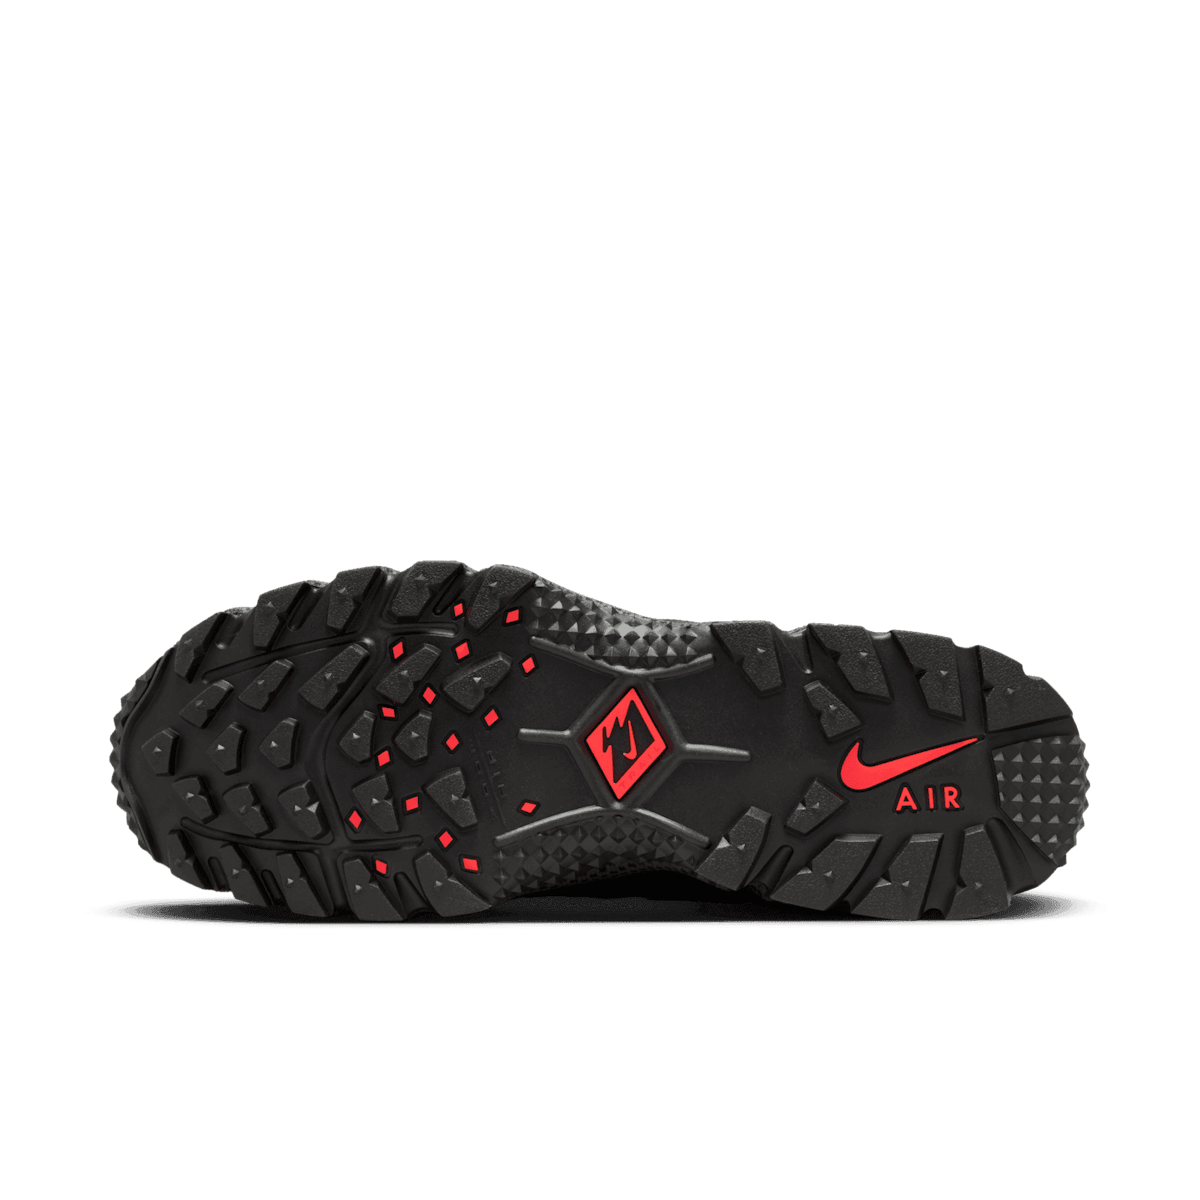 Nike Air Humara Black Bright Crimson Angle 0